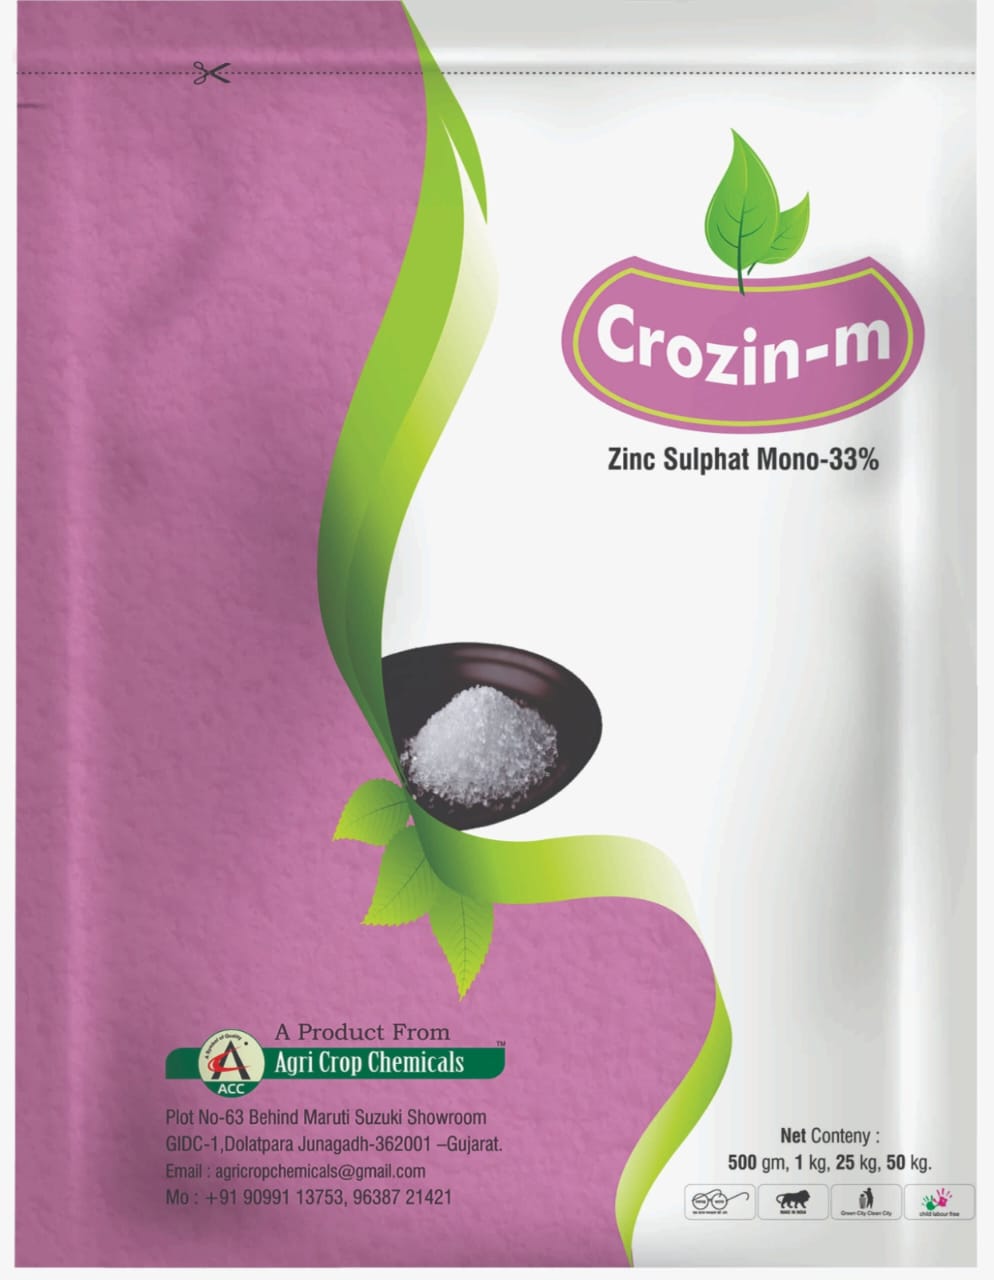 Water Soluble Fertilizer Zinc Sulphat Mono-33% Crozin-m Weight - 500 GM